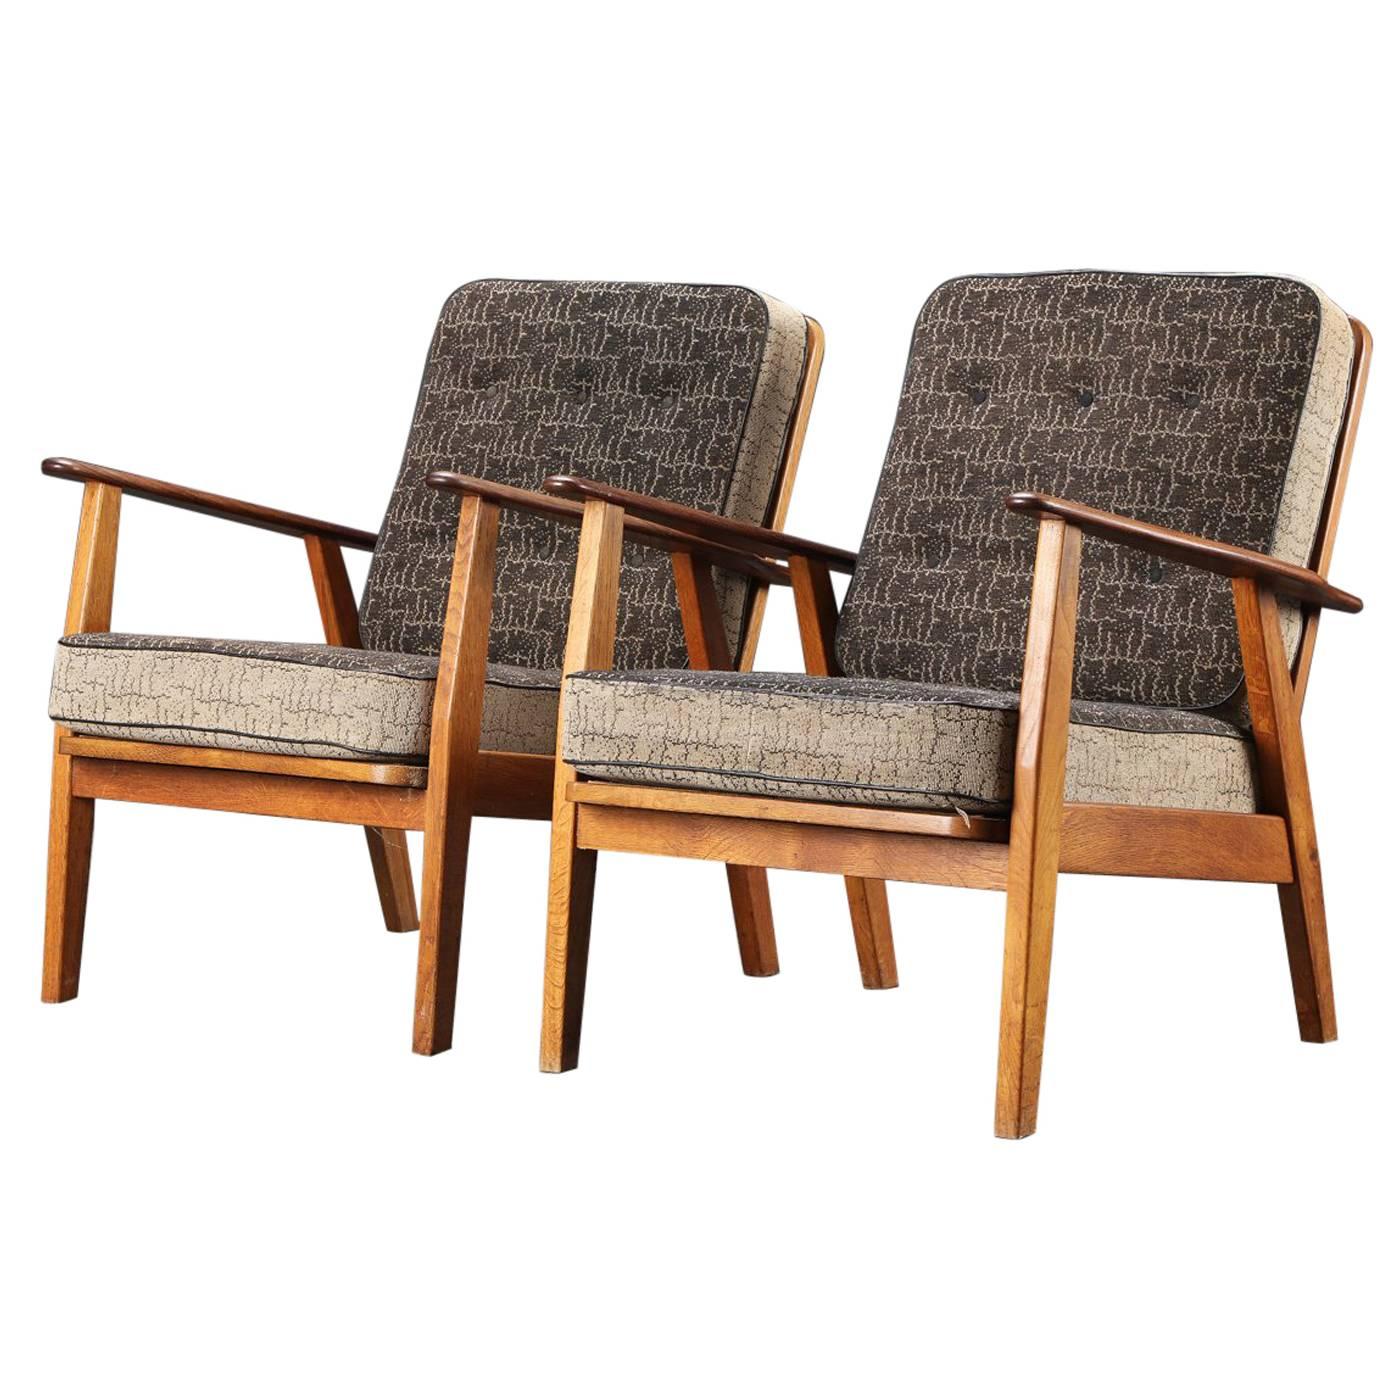 Pair of Danish Hans Wegner Style Midcentury Easy Chairs in Teak